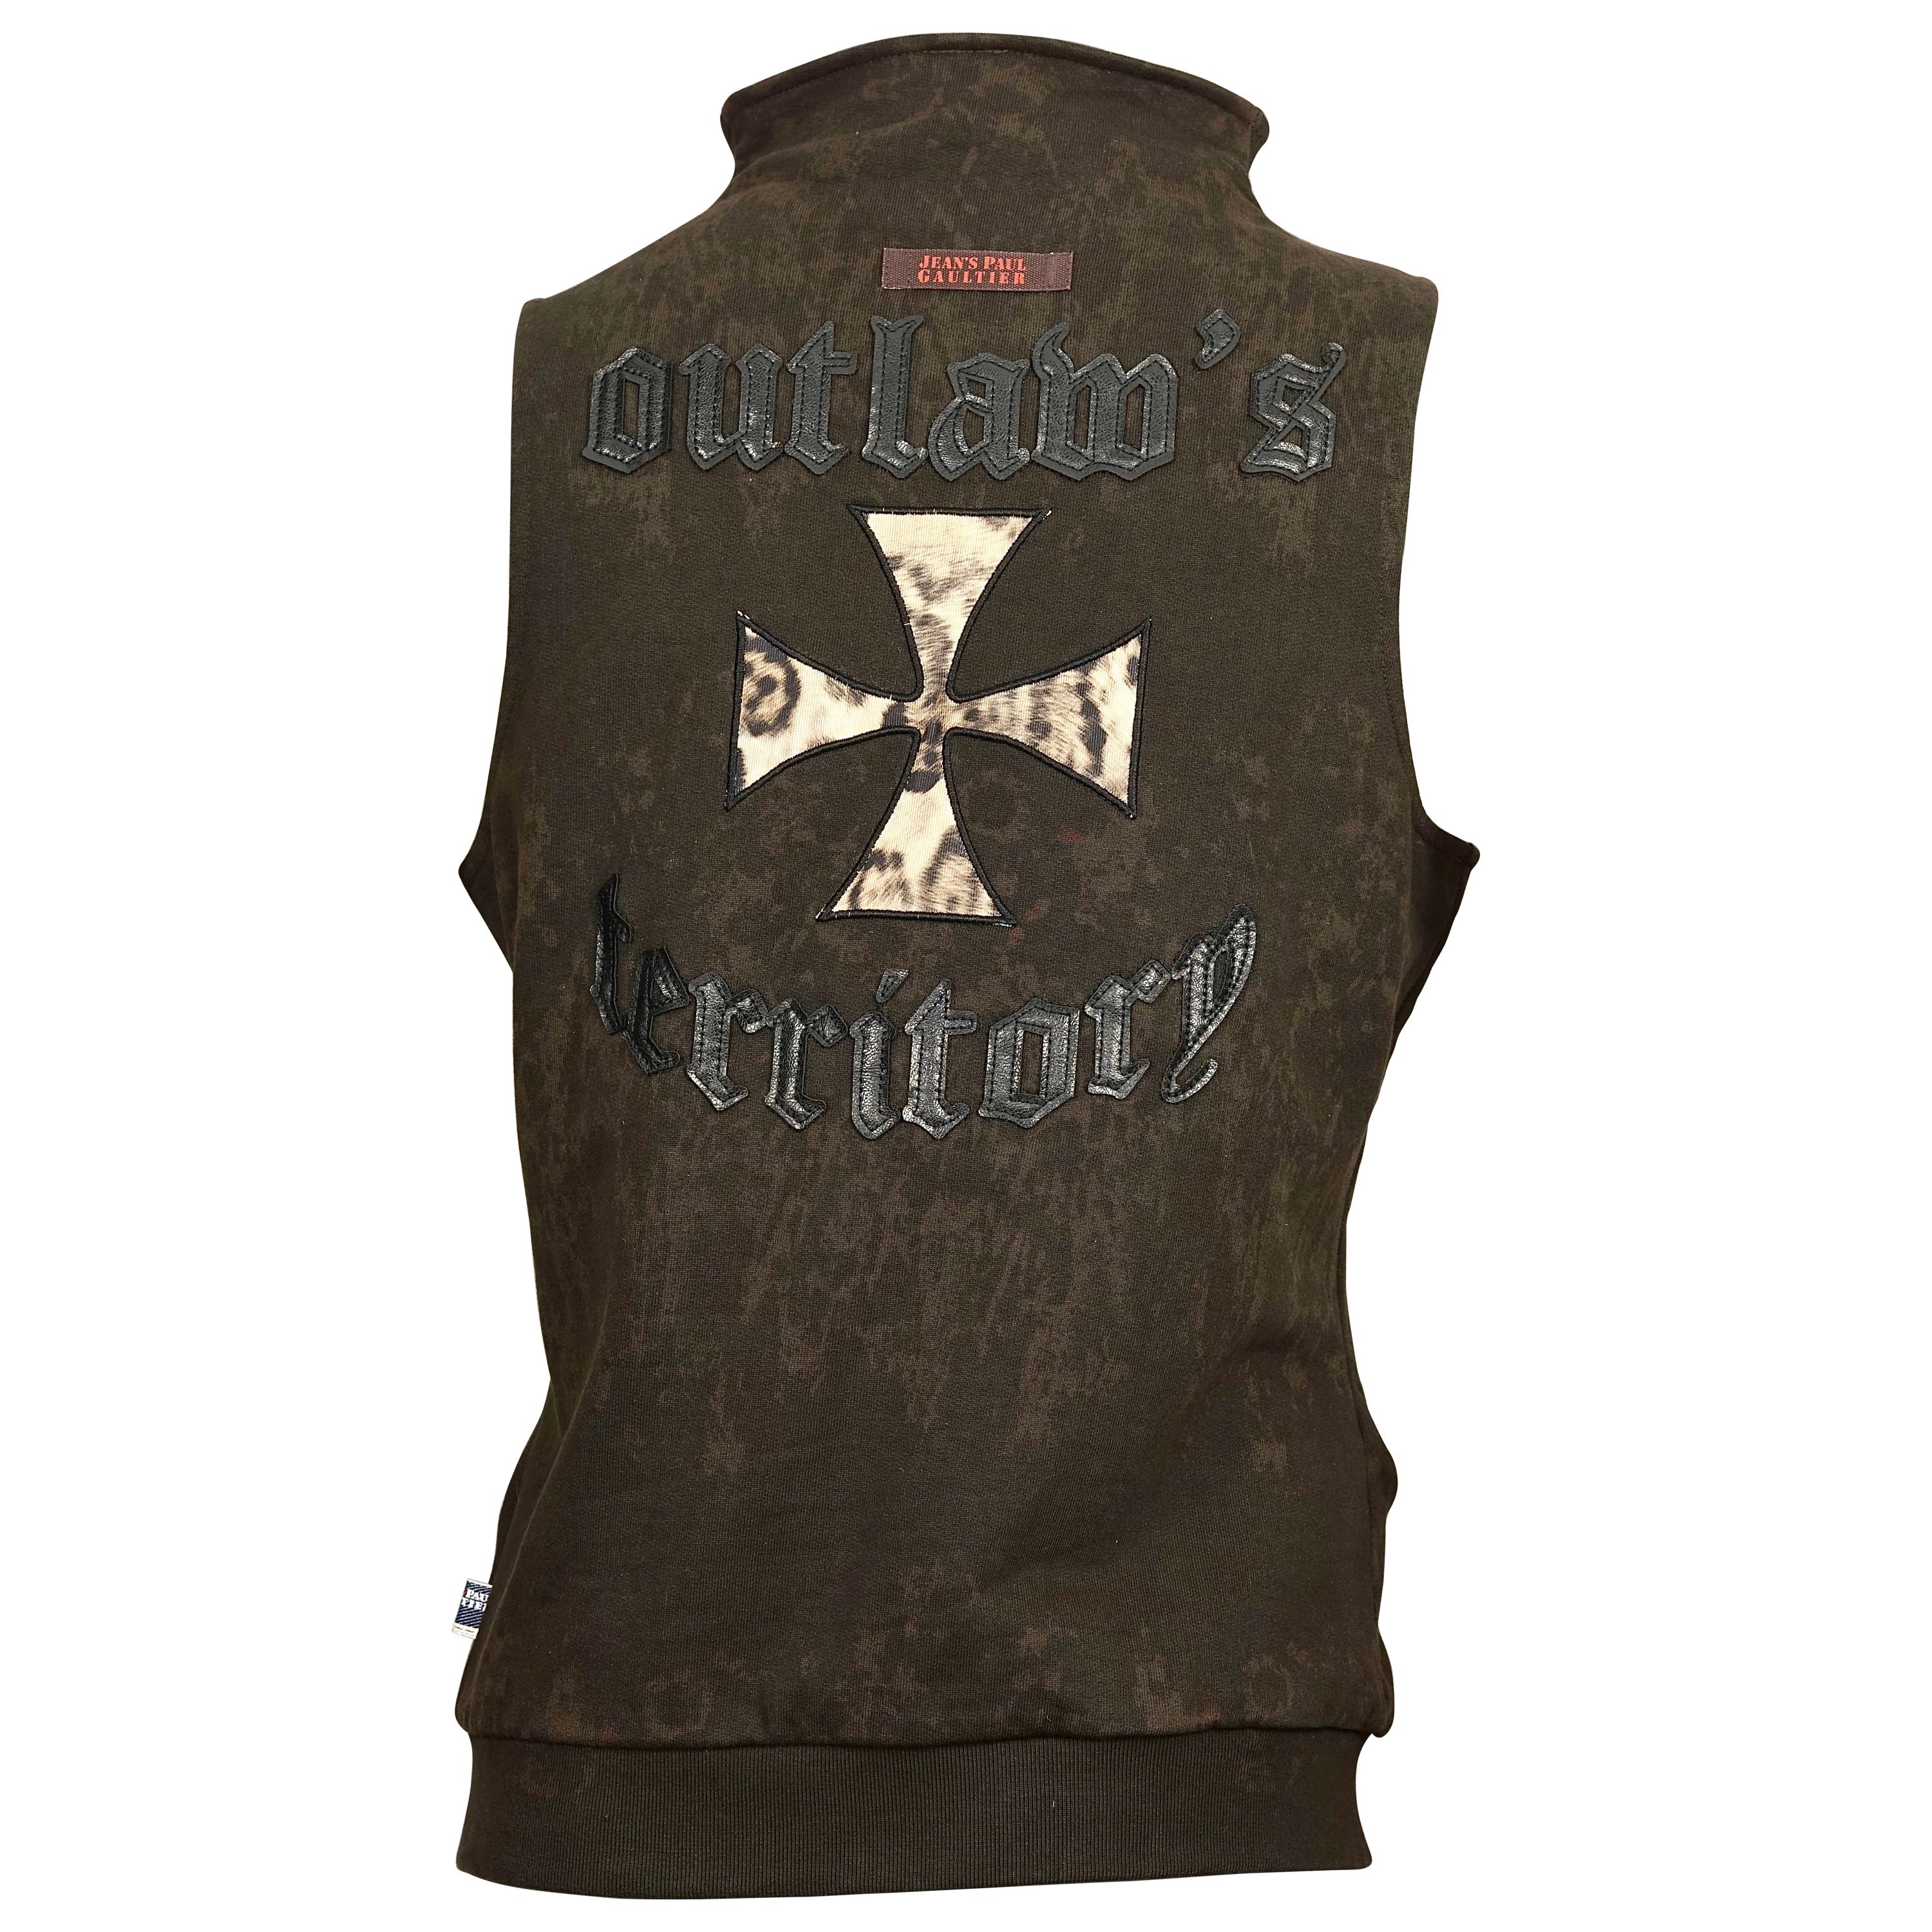 Vintage JEAN PAUL GAULTIER "Outlaws Territory" Cross Leopard Print Vest Jacket